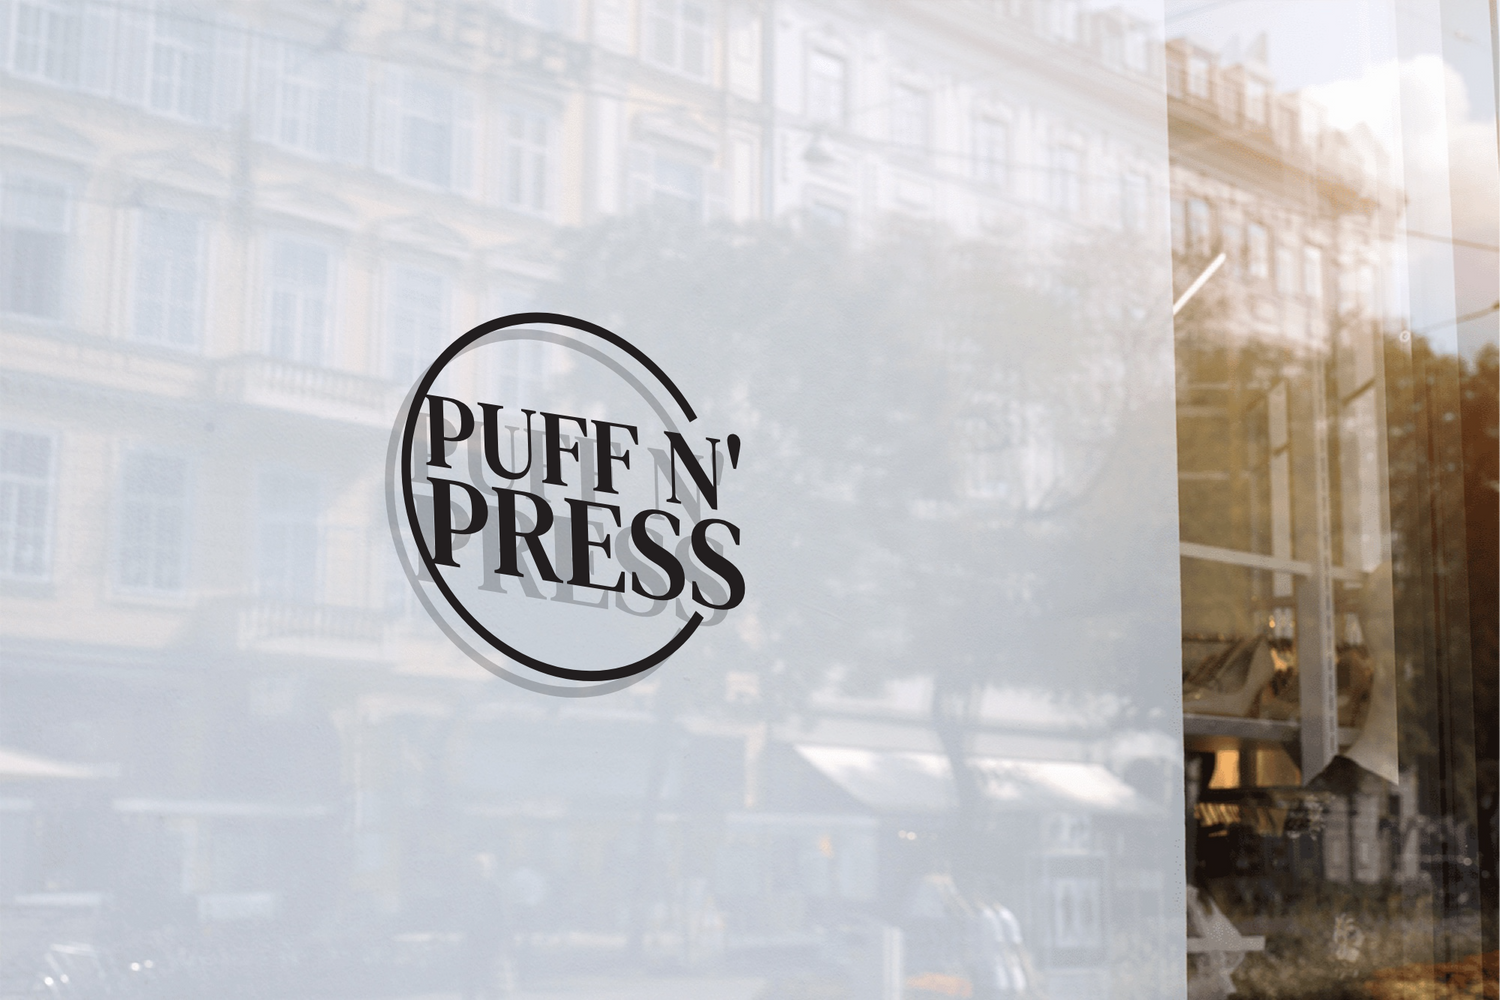 Puff n' Press  Portable Garment Care Solutions – The Puff n' Press